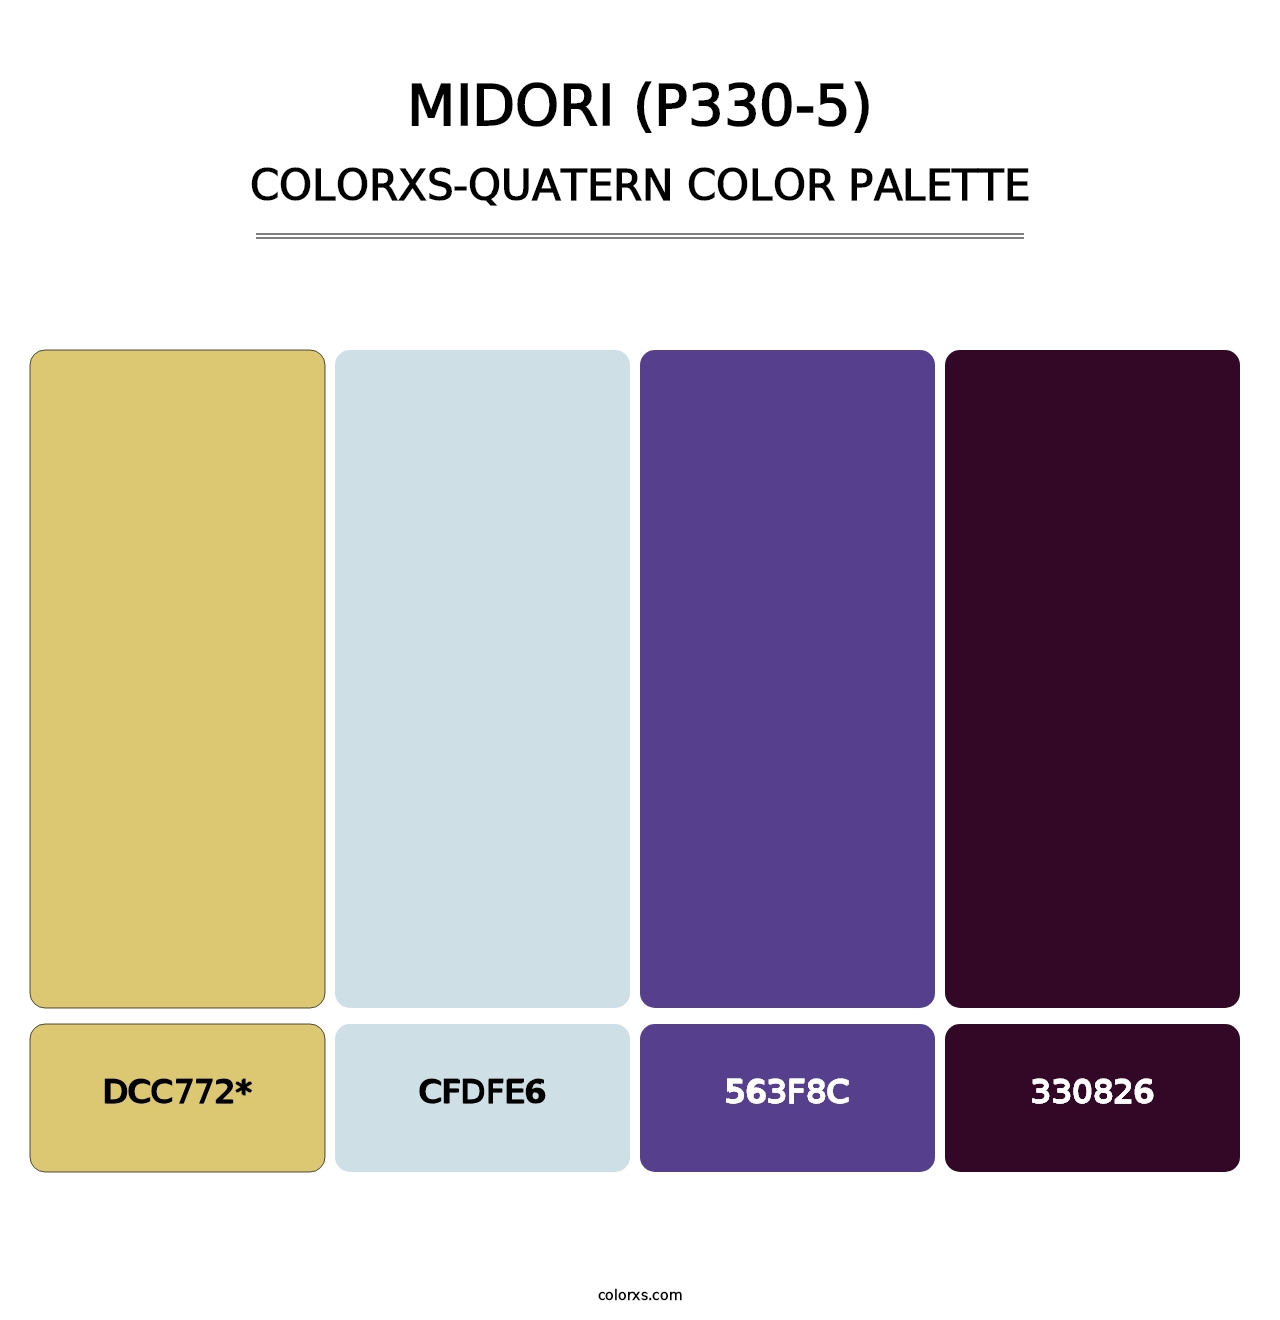 Midori (P330-5) - Colorxs Quatern Palette